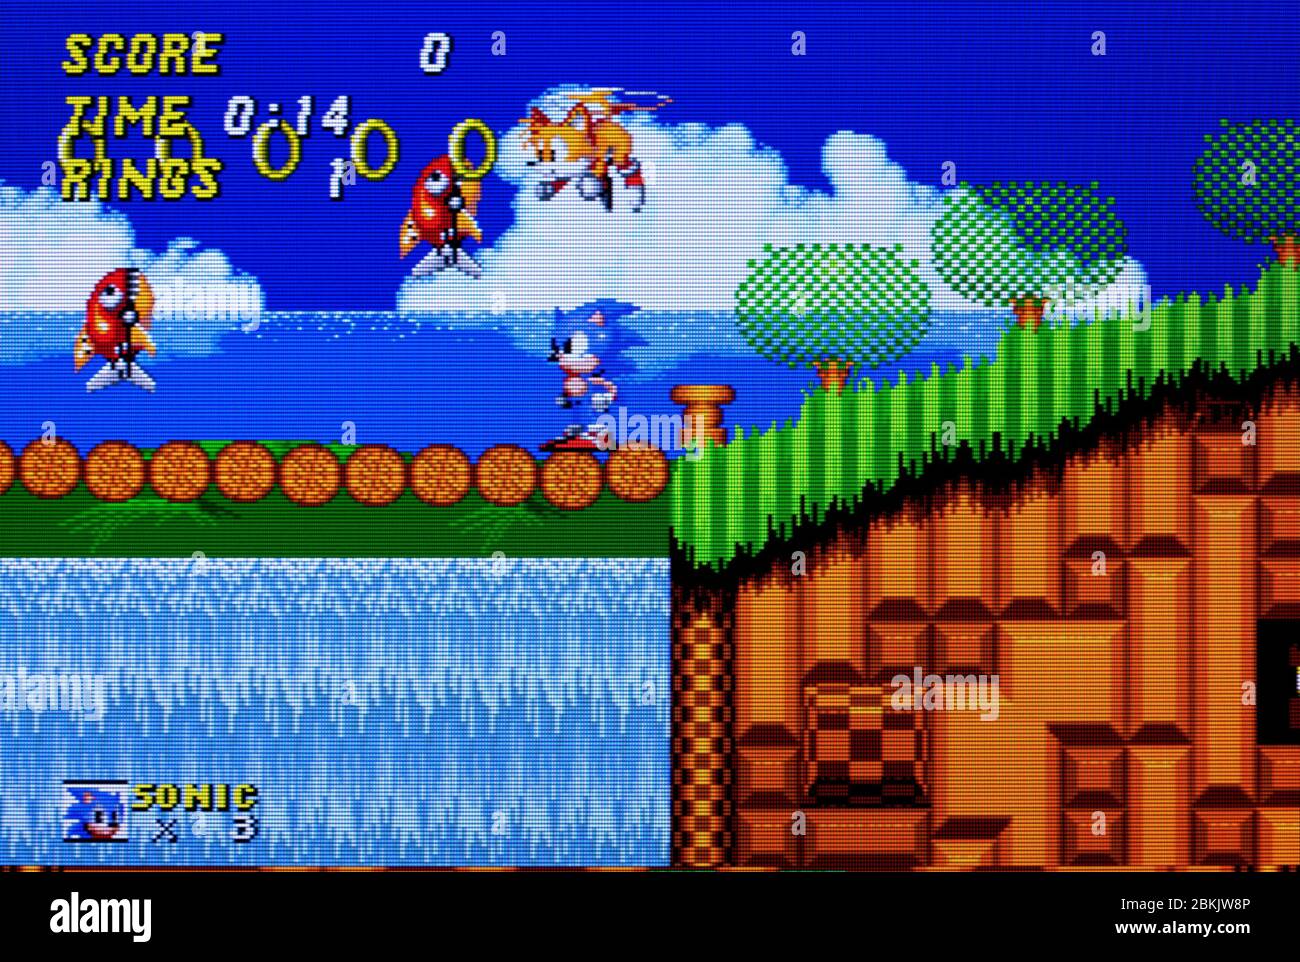 Sonic the Hedgehog 2 (Music) [Sega Genesis / Mega Drive] : Free Download,  Borrow, and Streaming : Internet Archive